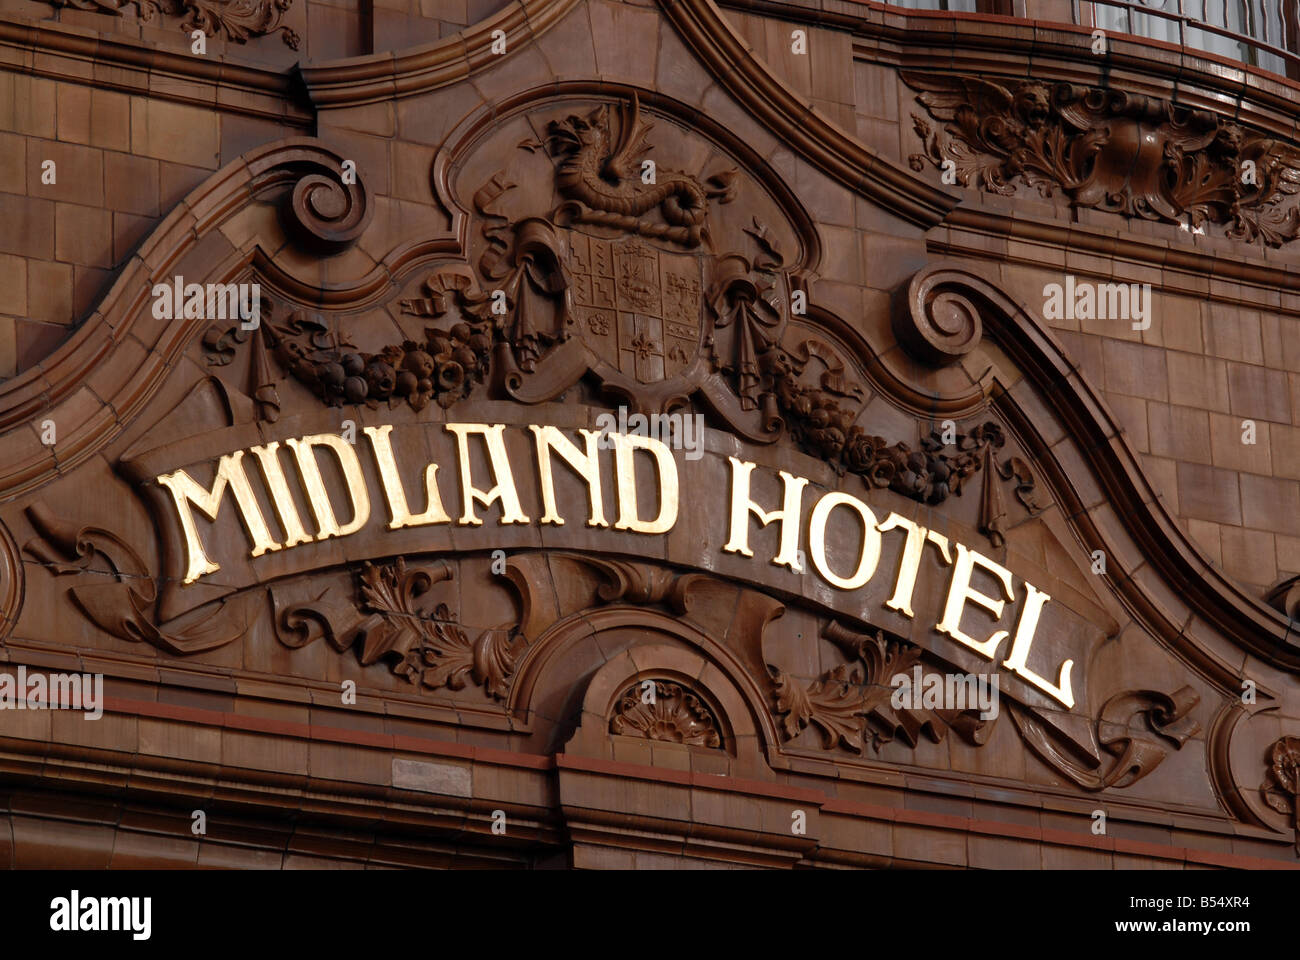 Midland Hotel Manchester Stock Photo